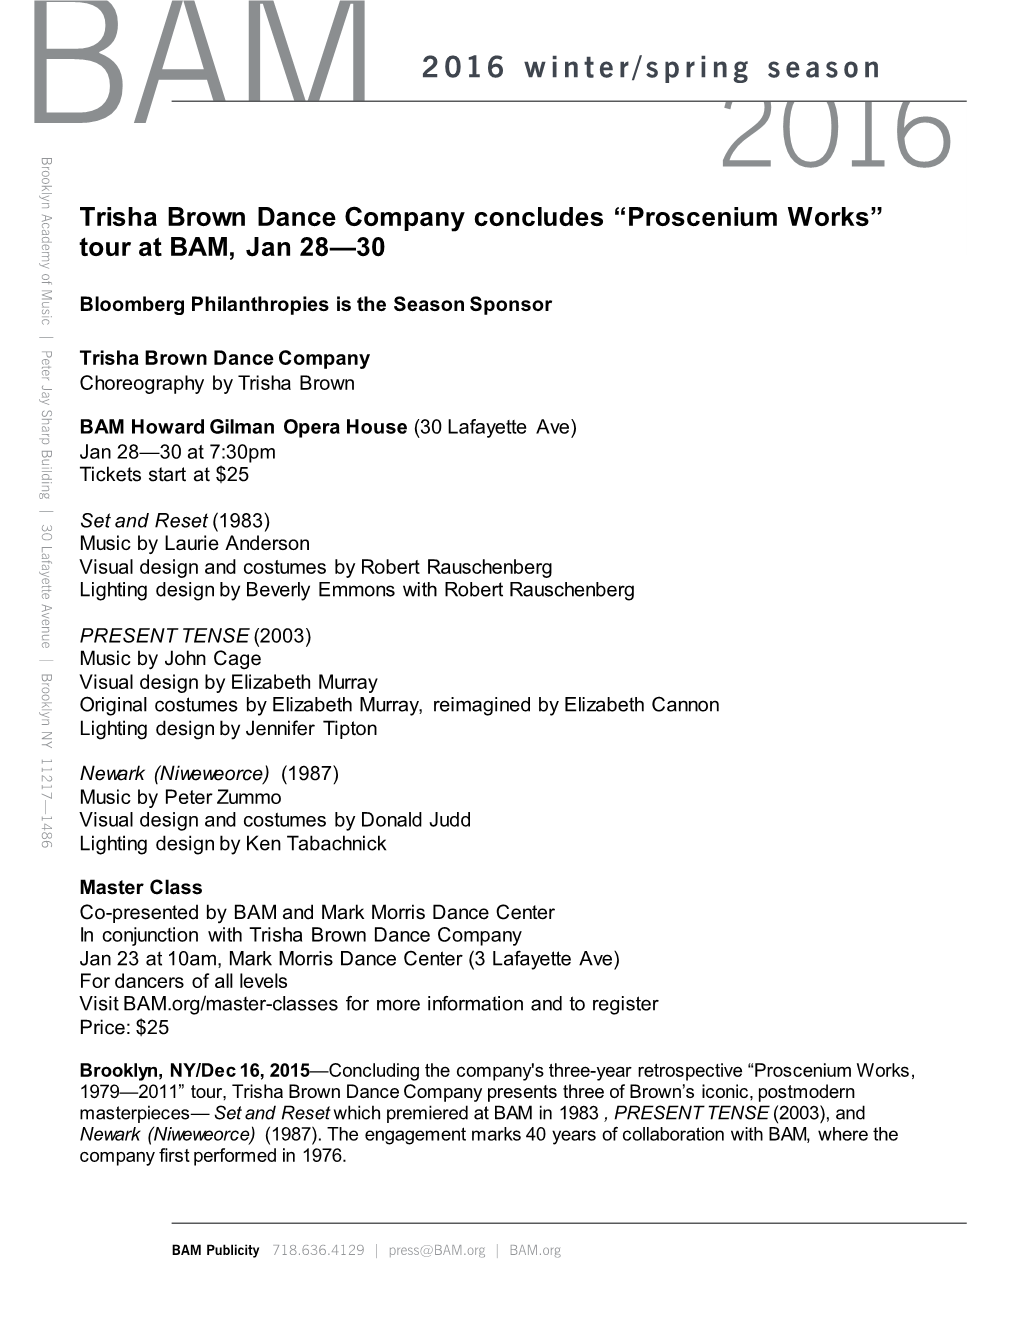 Trisha Brown Dance Company Concludes “Proscenium Works” Tour at BAM, Jan 28—30